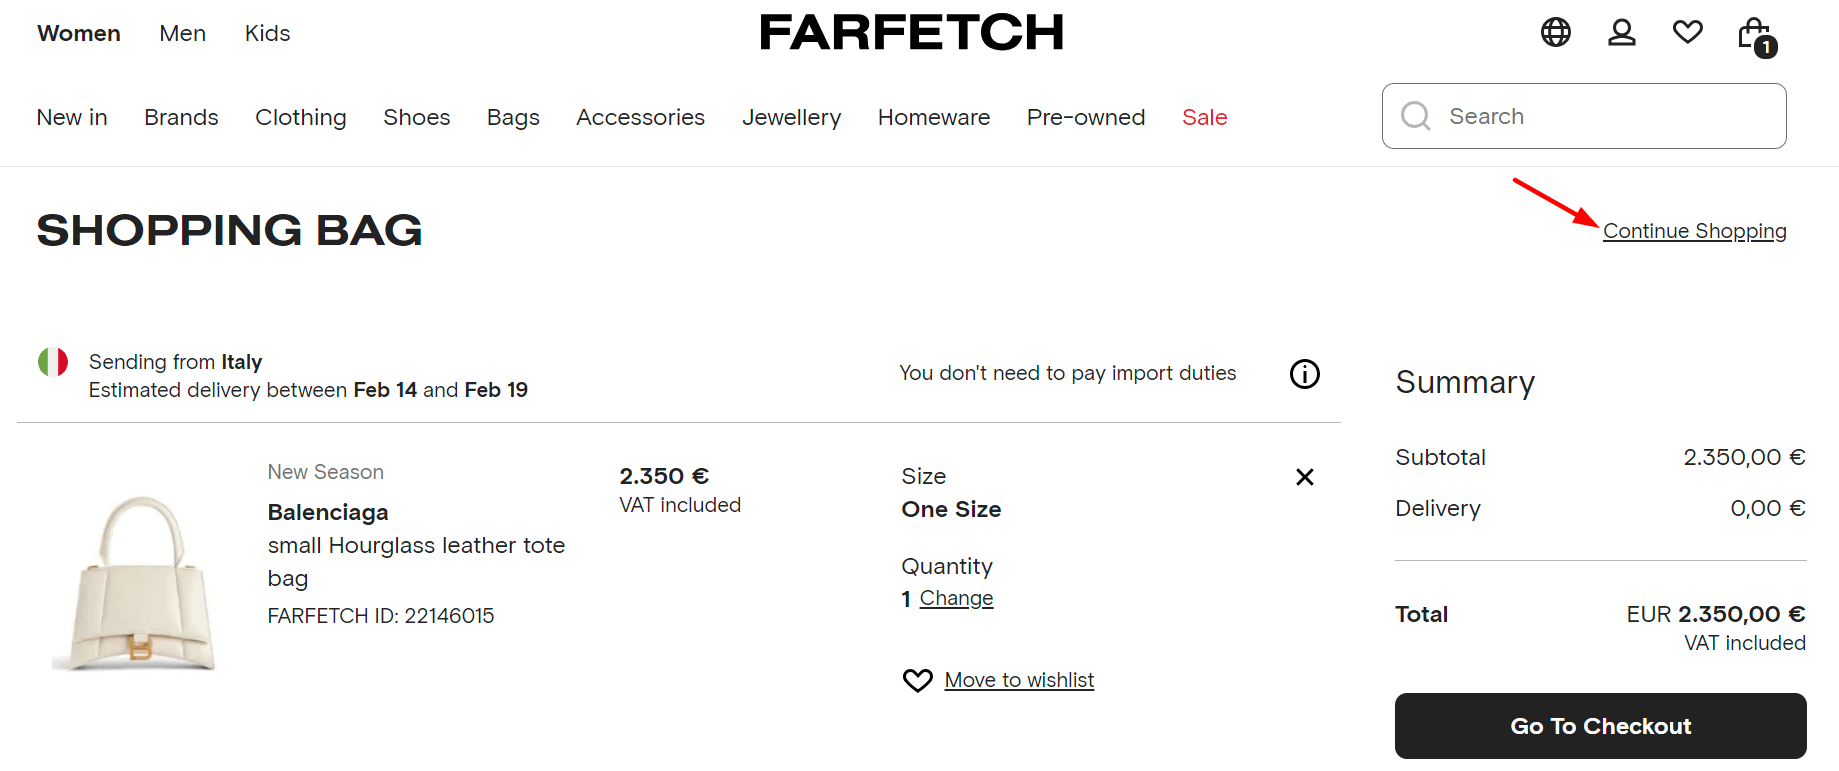 Farfetch Continue Shopping